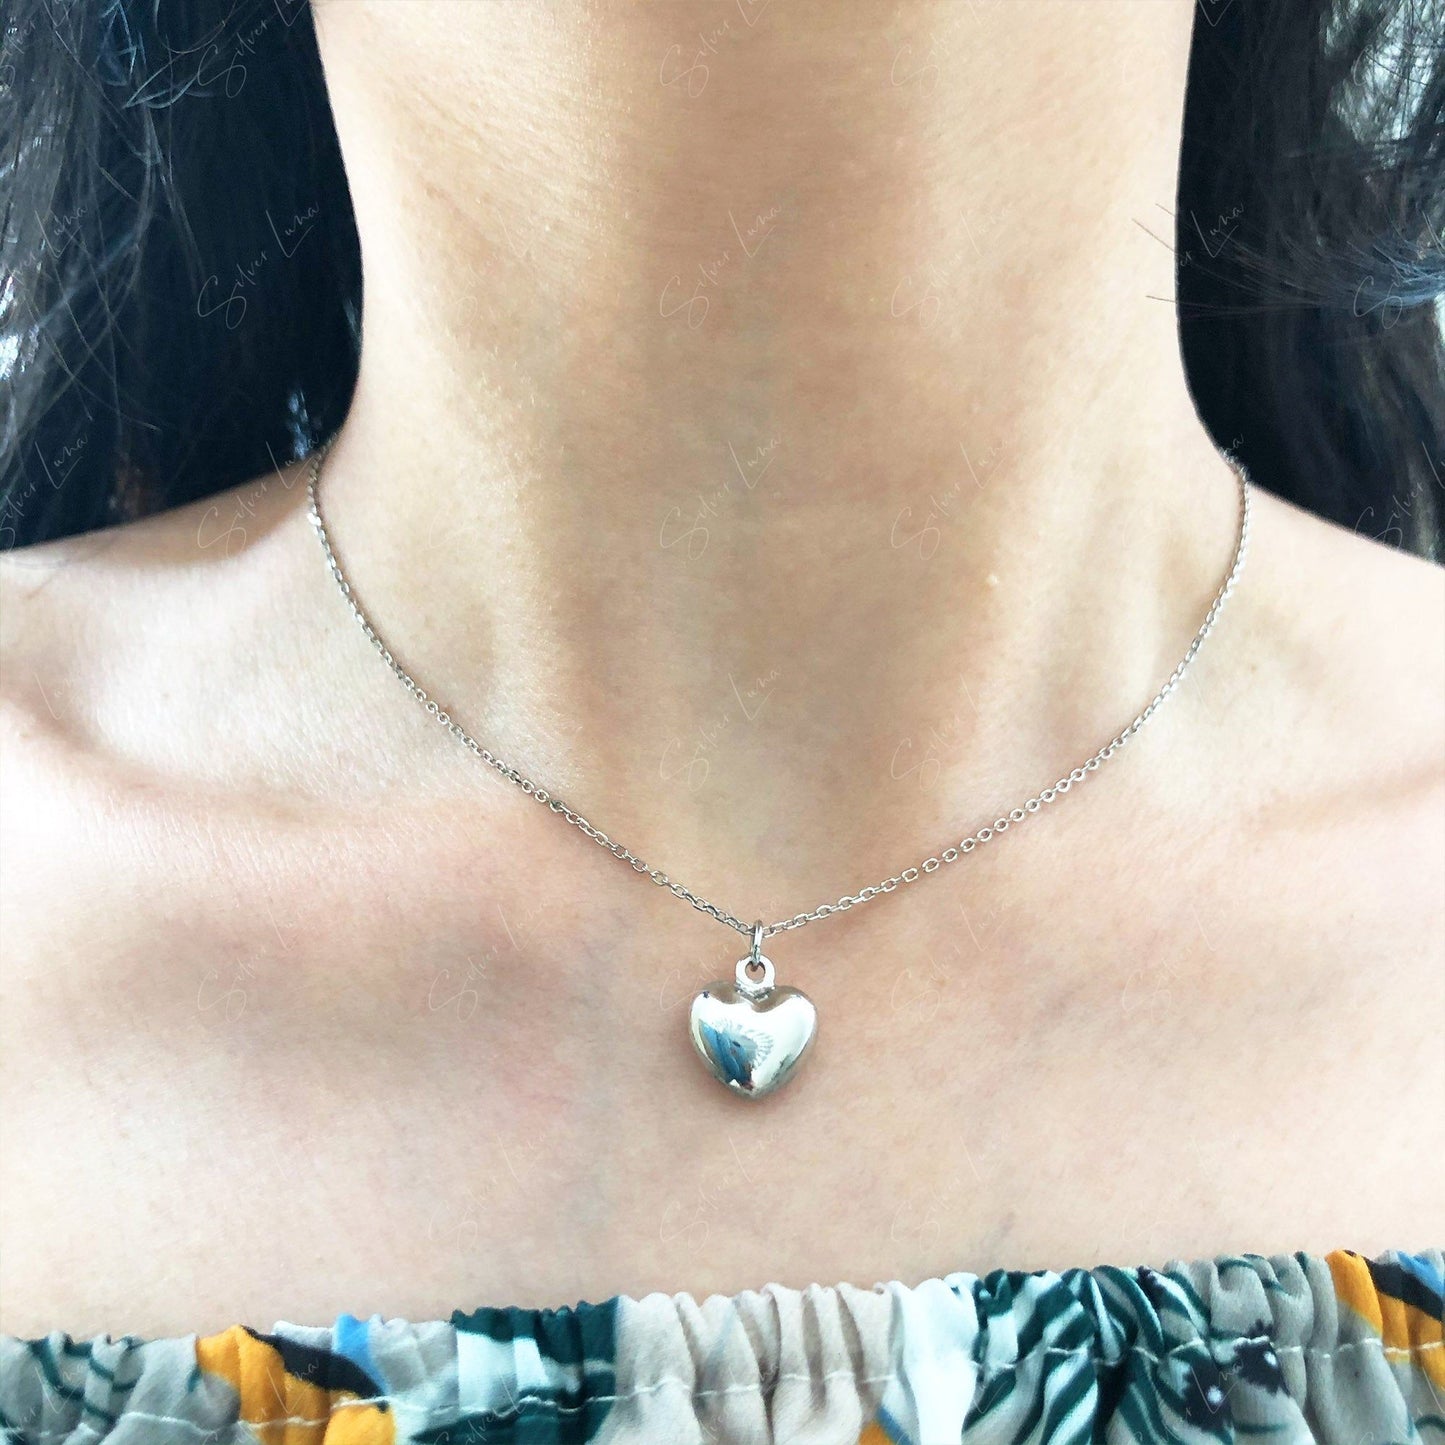 Heart charm pendant necklace